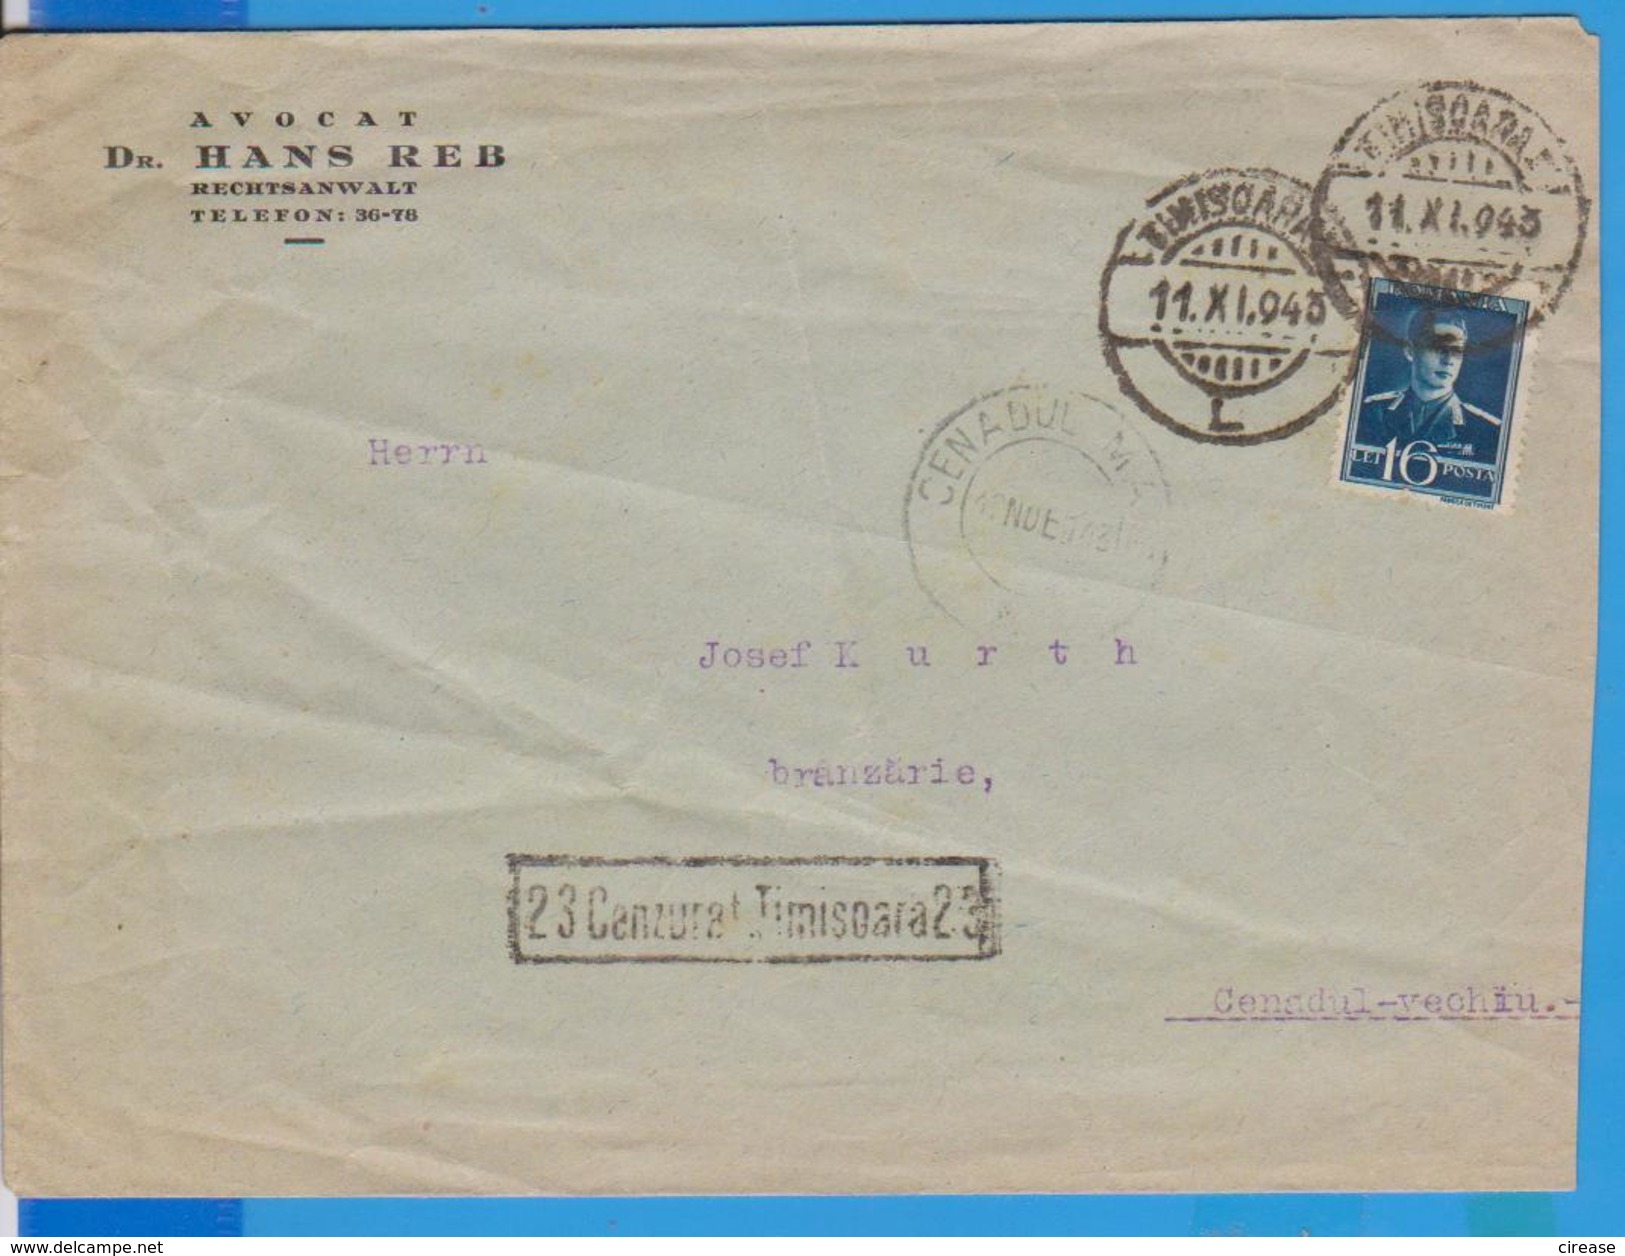 NICE COVER NICE STAMPS KING MICHEL CENSORSHIP TIMISOARA 23 ROMANIA 1943 POSTAL HISTORY - Briefe U. Dokumente